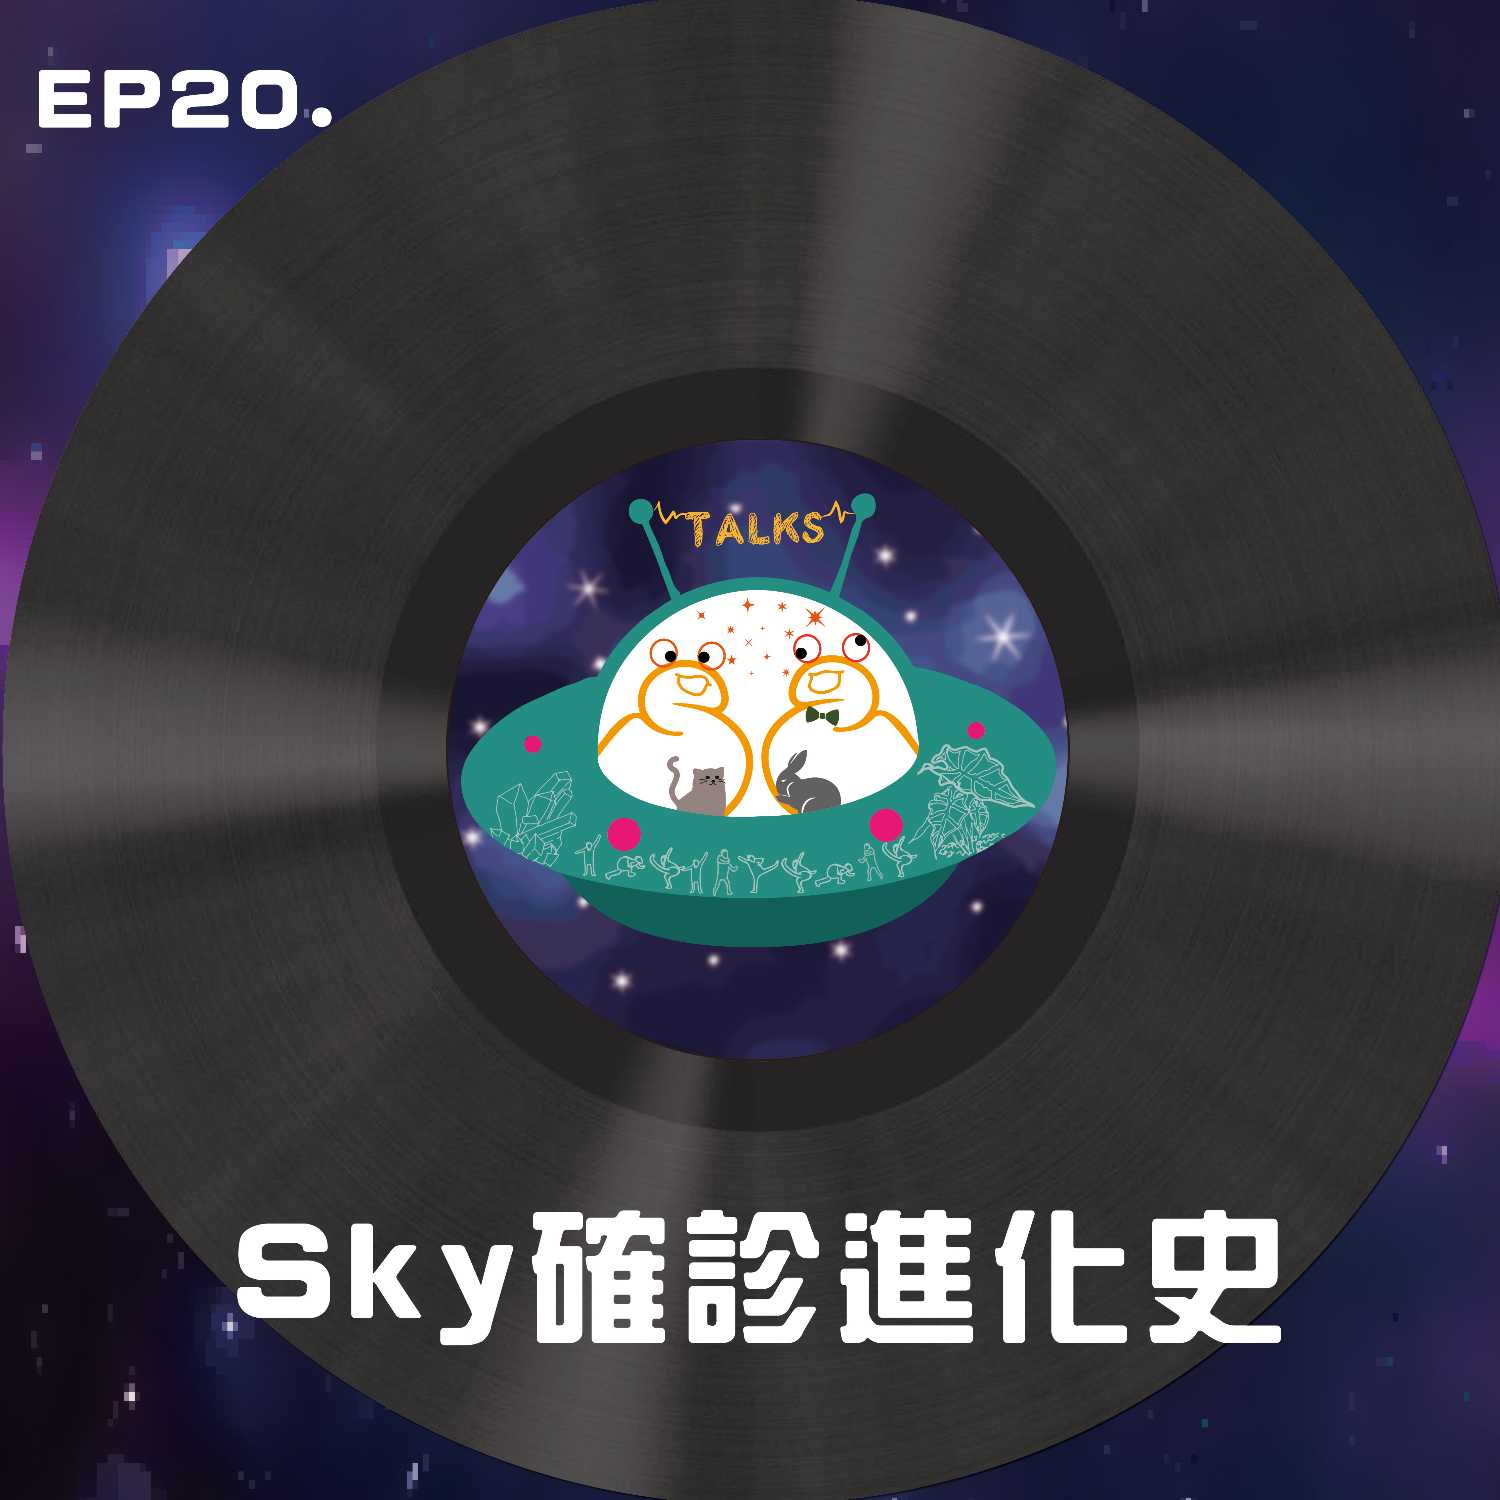 SS.talks 宇宙的垃圾話 ep 20 - sky進化史